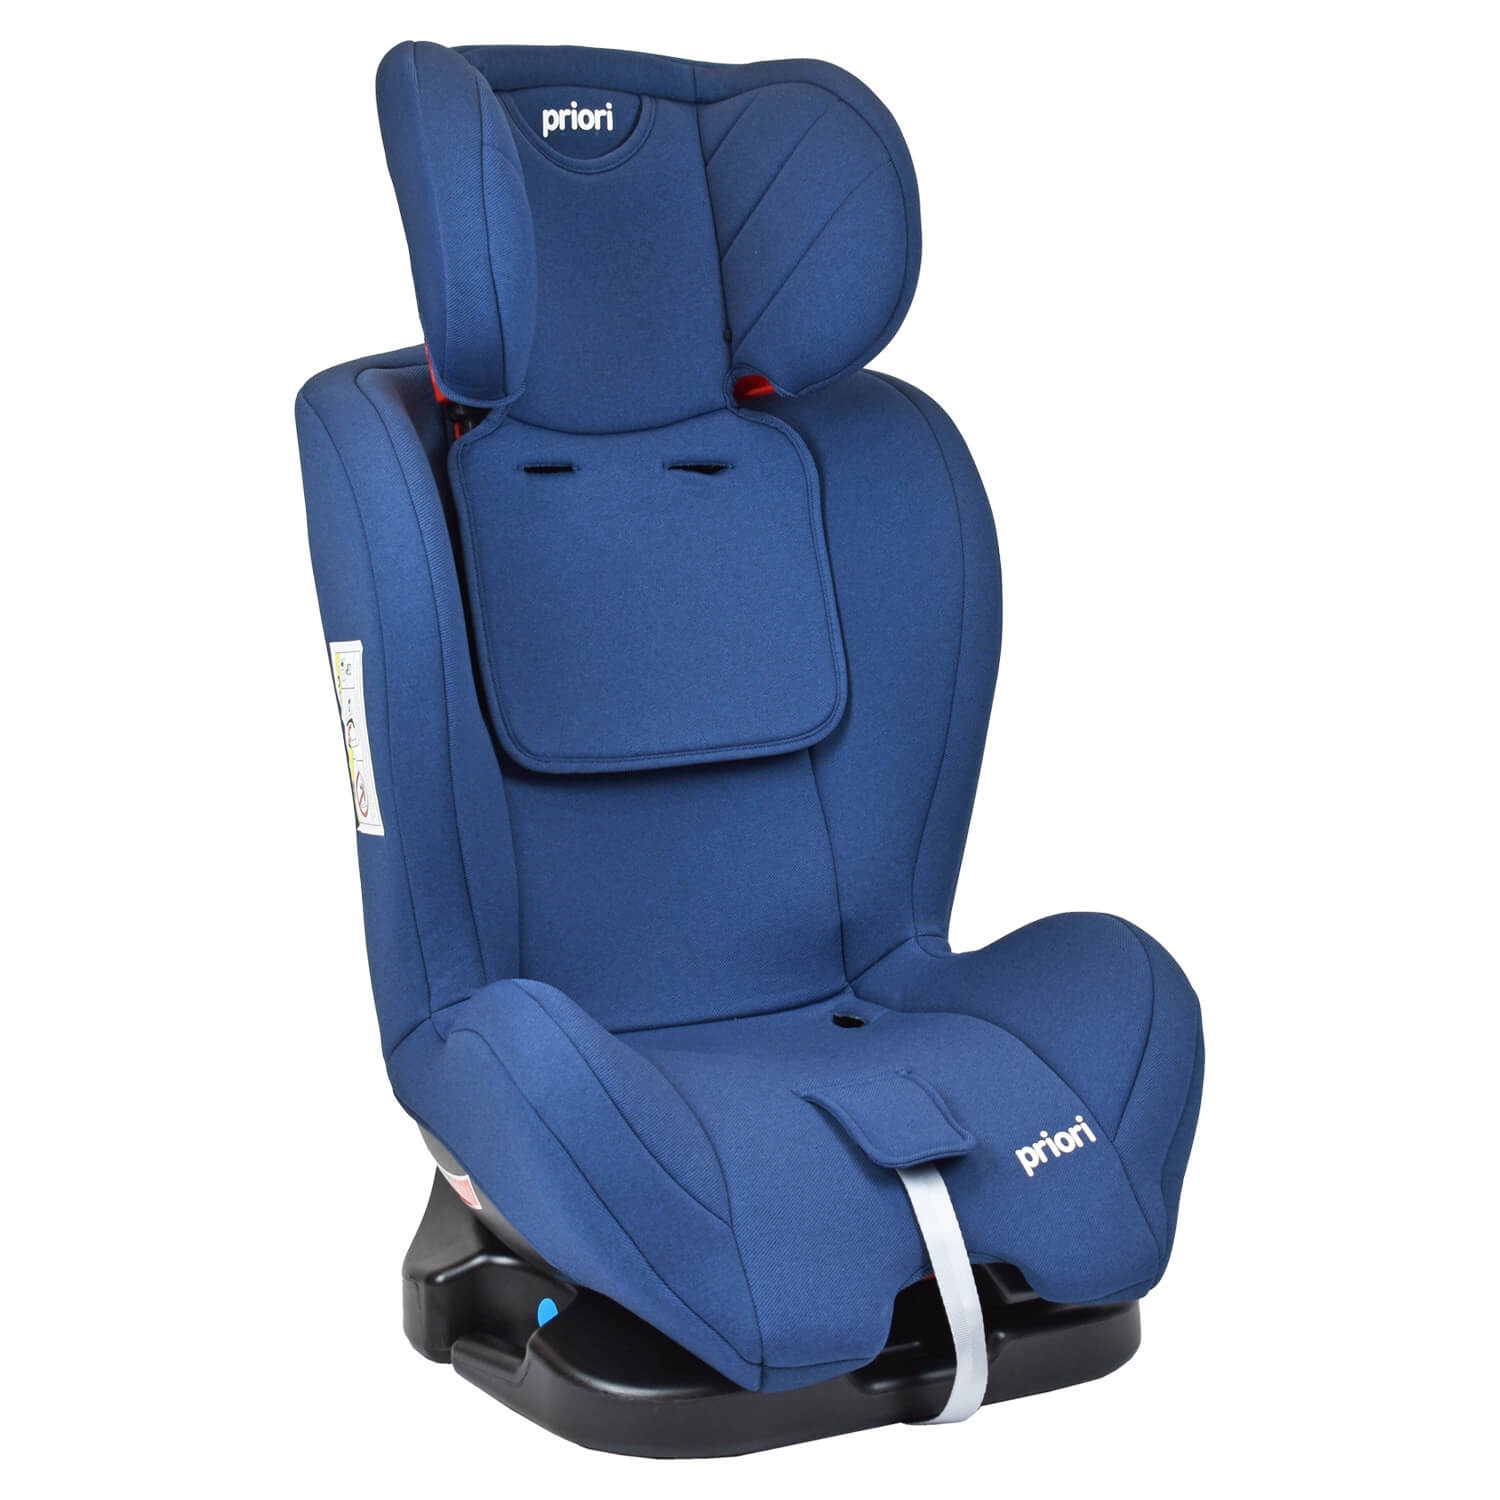 silla para carro bebé priori prix azul8 (1)